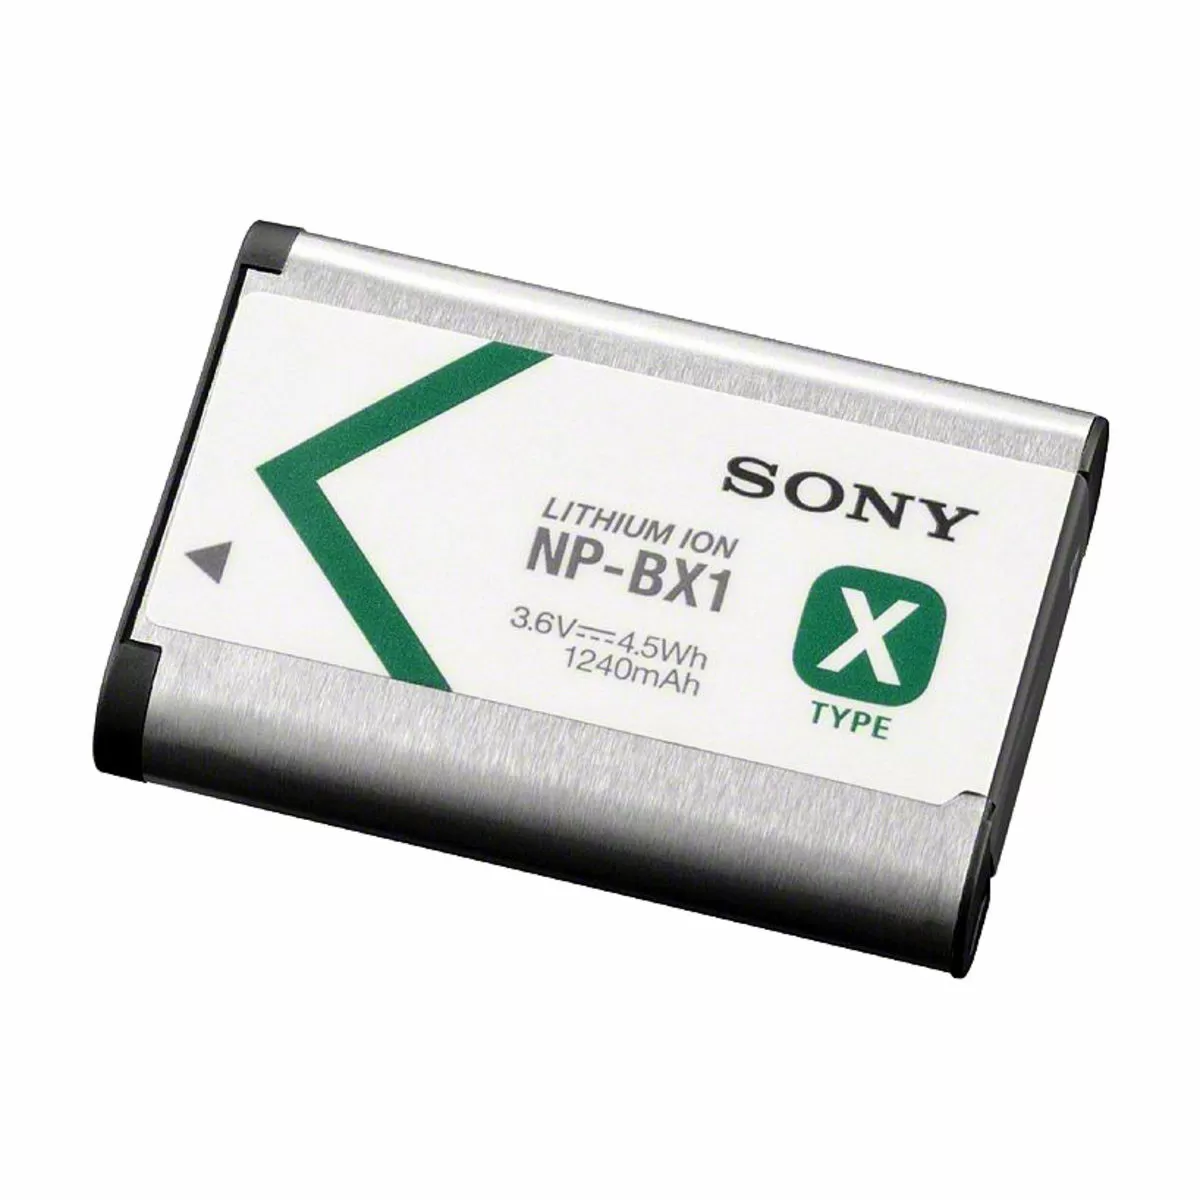 Sony batteries. Sony NP-bx1. Аккумулятор для цифрового фотоаппарата Sony NP-bx1. Батарейки для сони х3000. Аккумулятор для видеокамеры Sony.